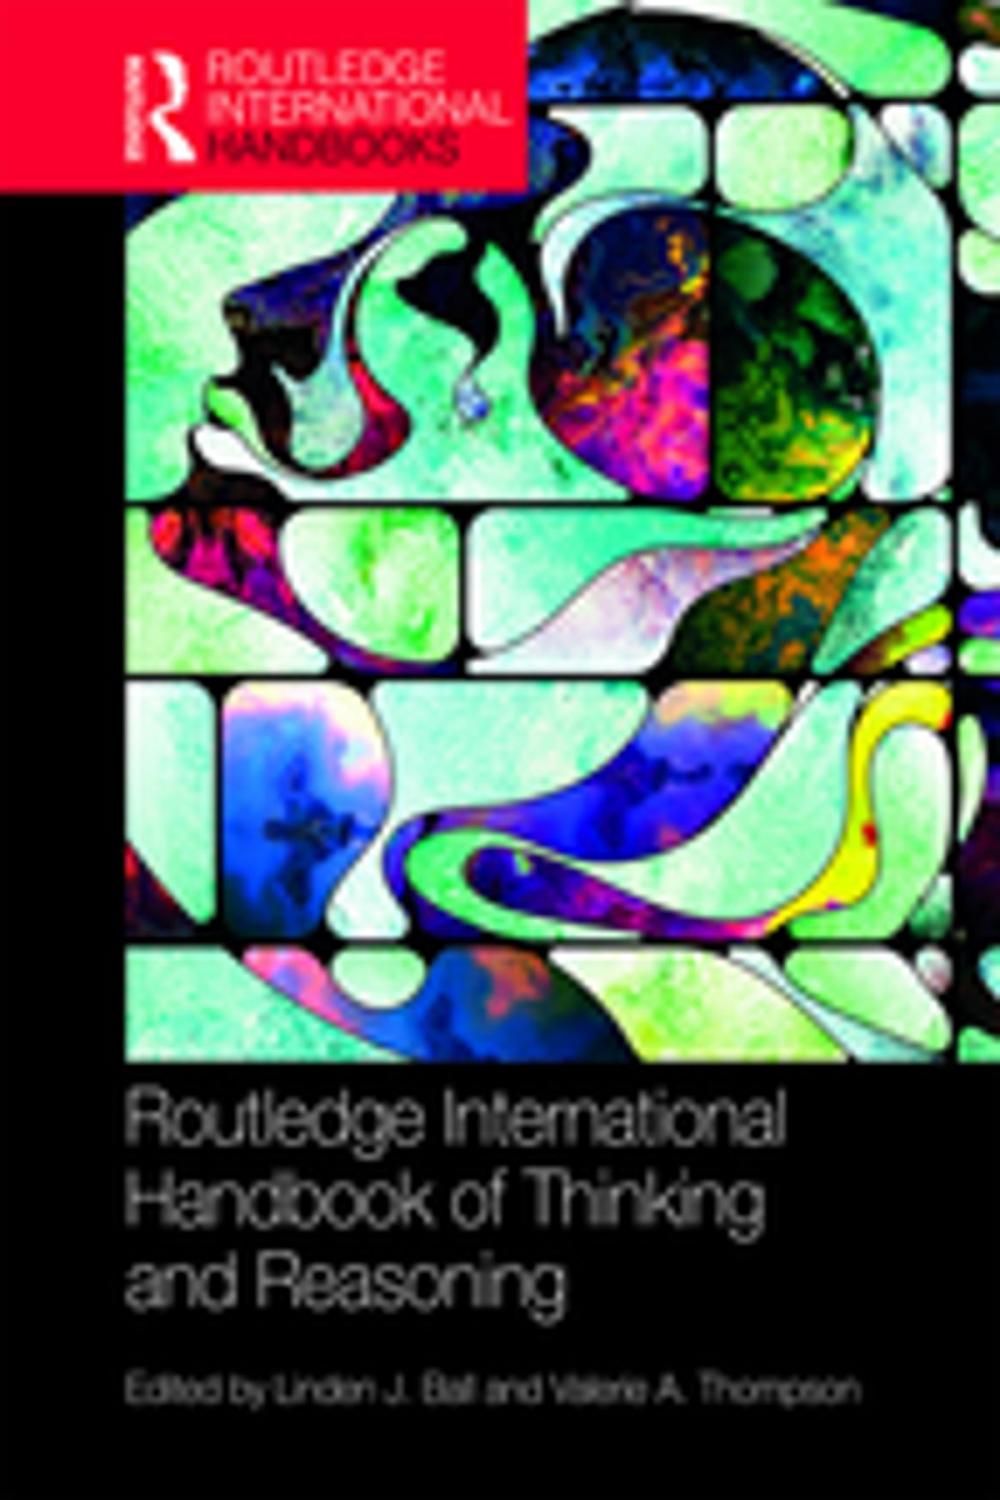 Big bigCover of International Handbook of Thinking and Reasoning